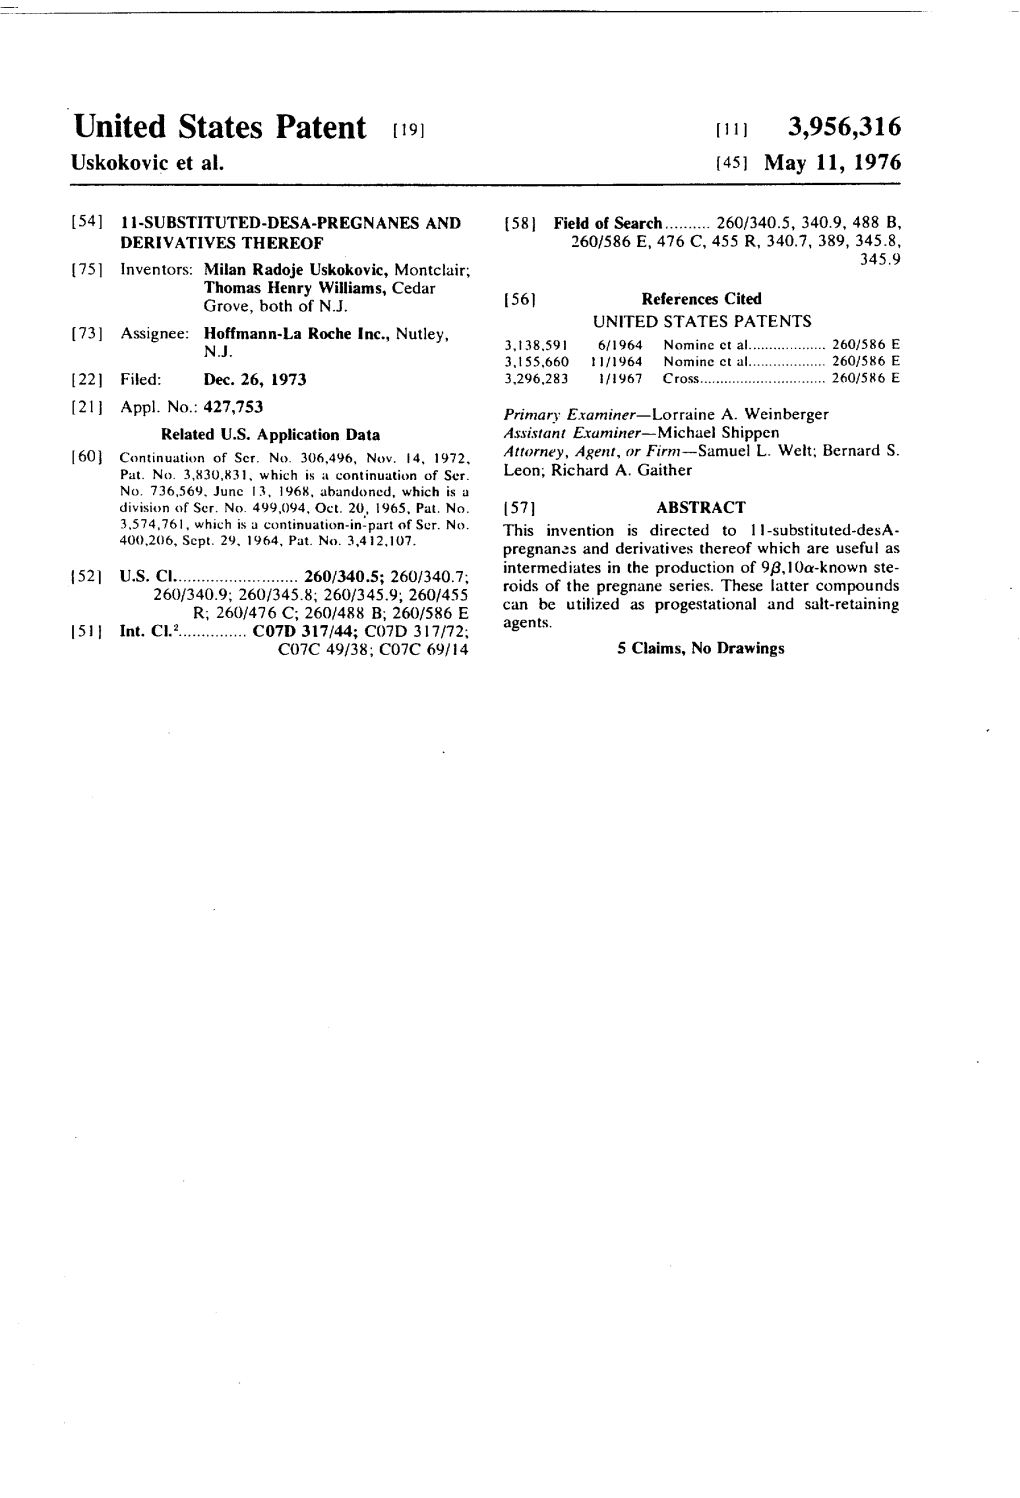 United States Patent (19) 11, 3,956,316 Uskokovic Et Al